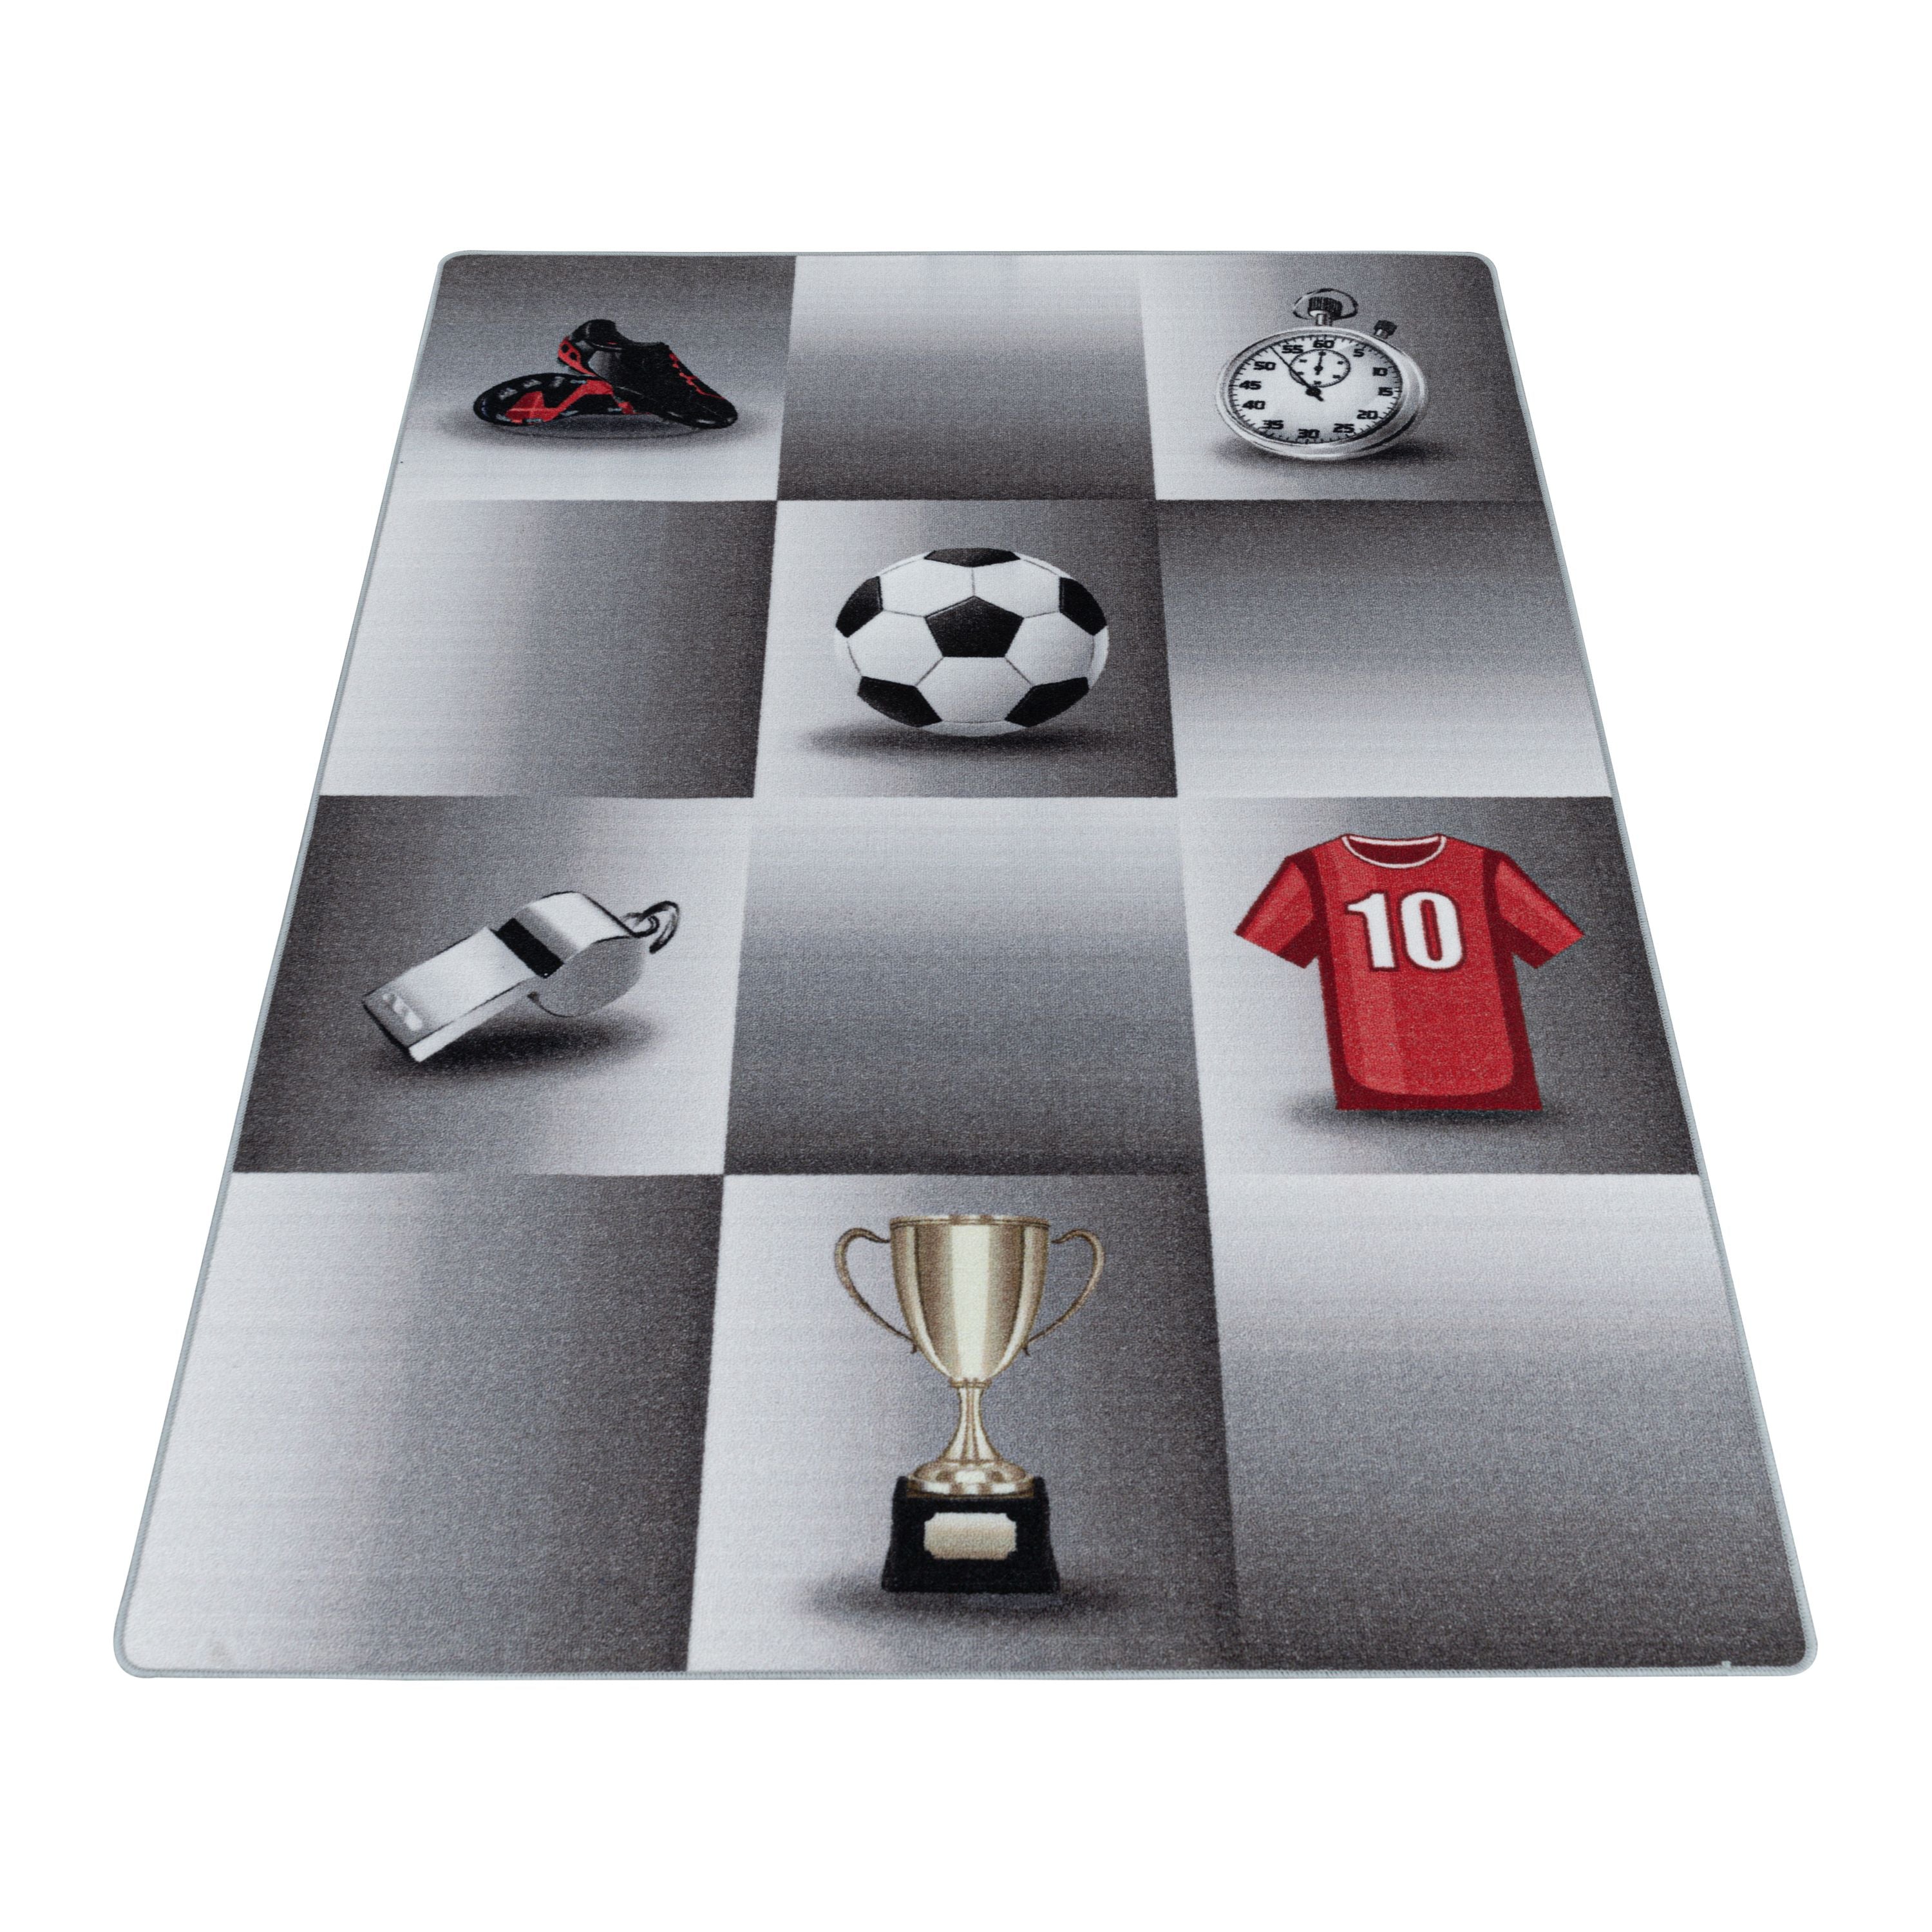 Kurzflor Kinderteppich Kinderzimmer Teppich Spiel Fussball Trikot Pokal Grau